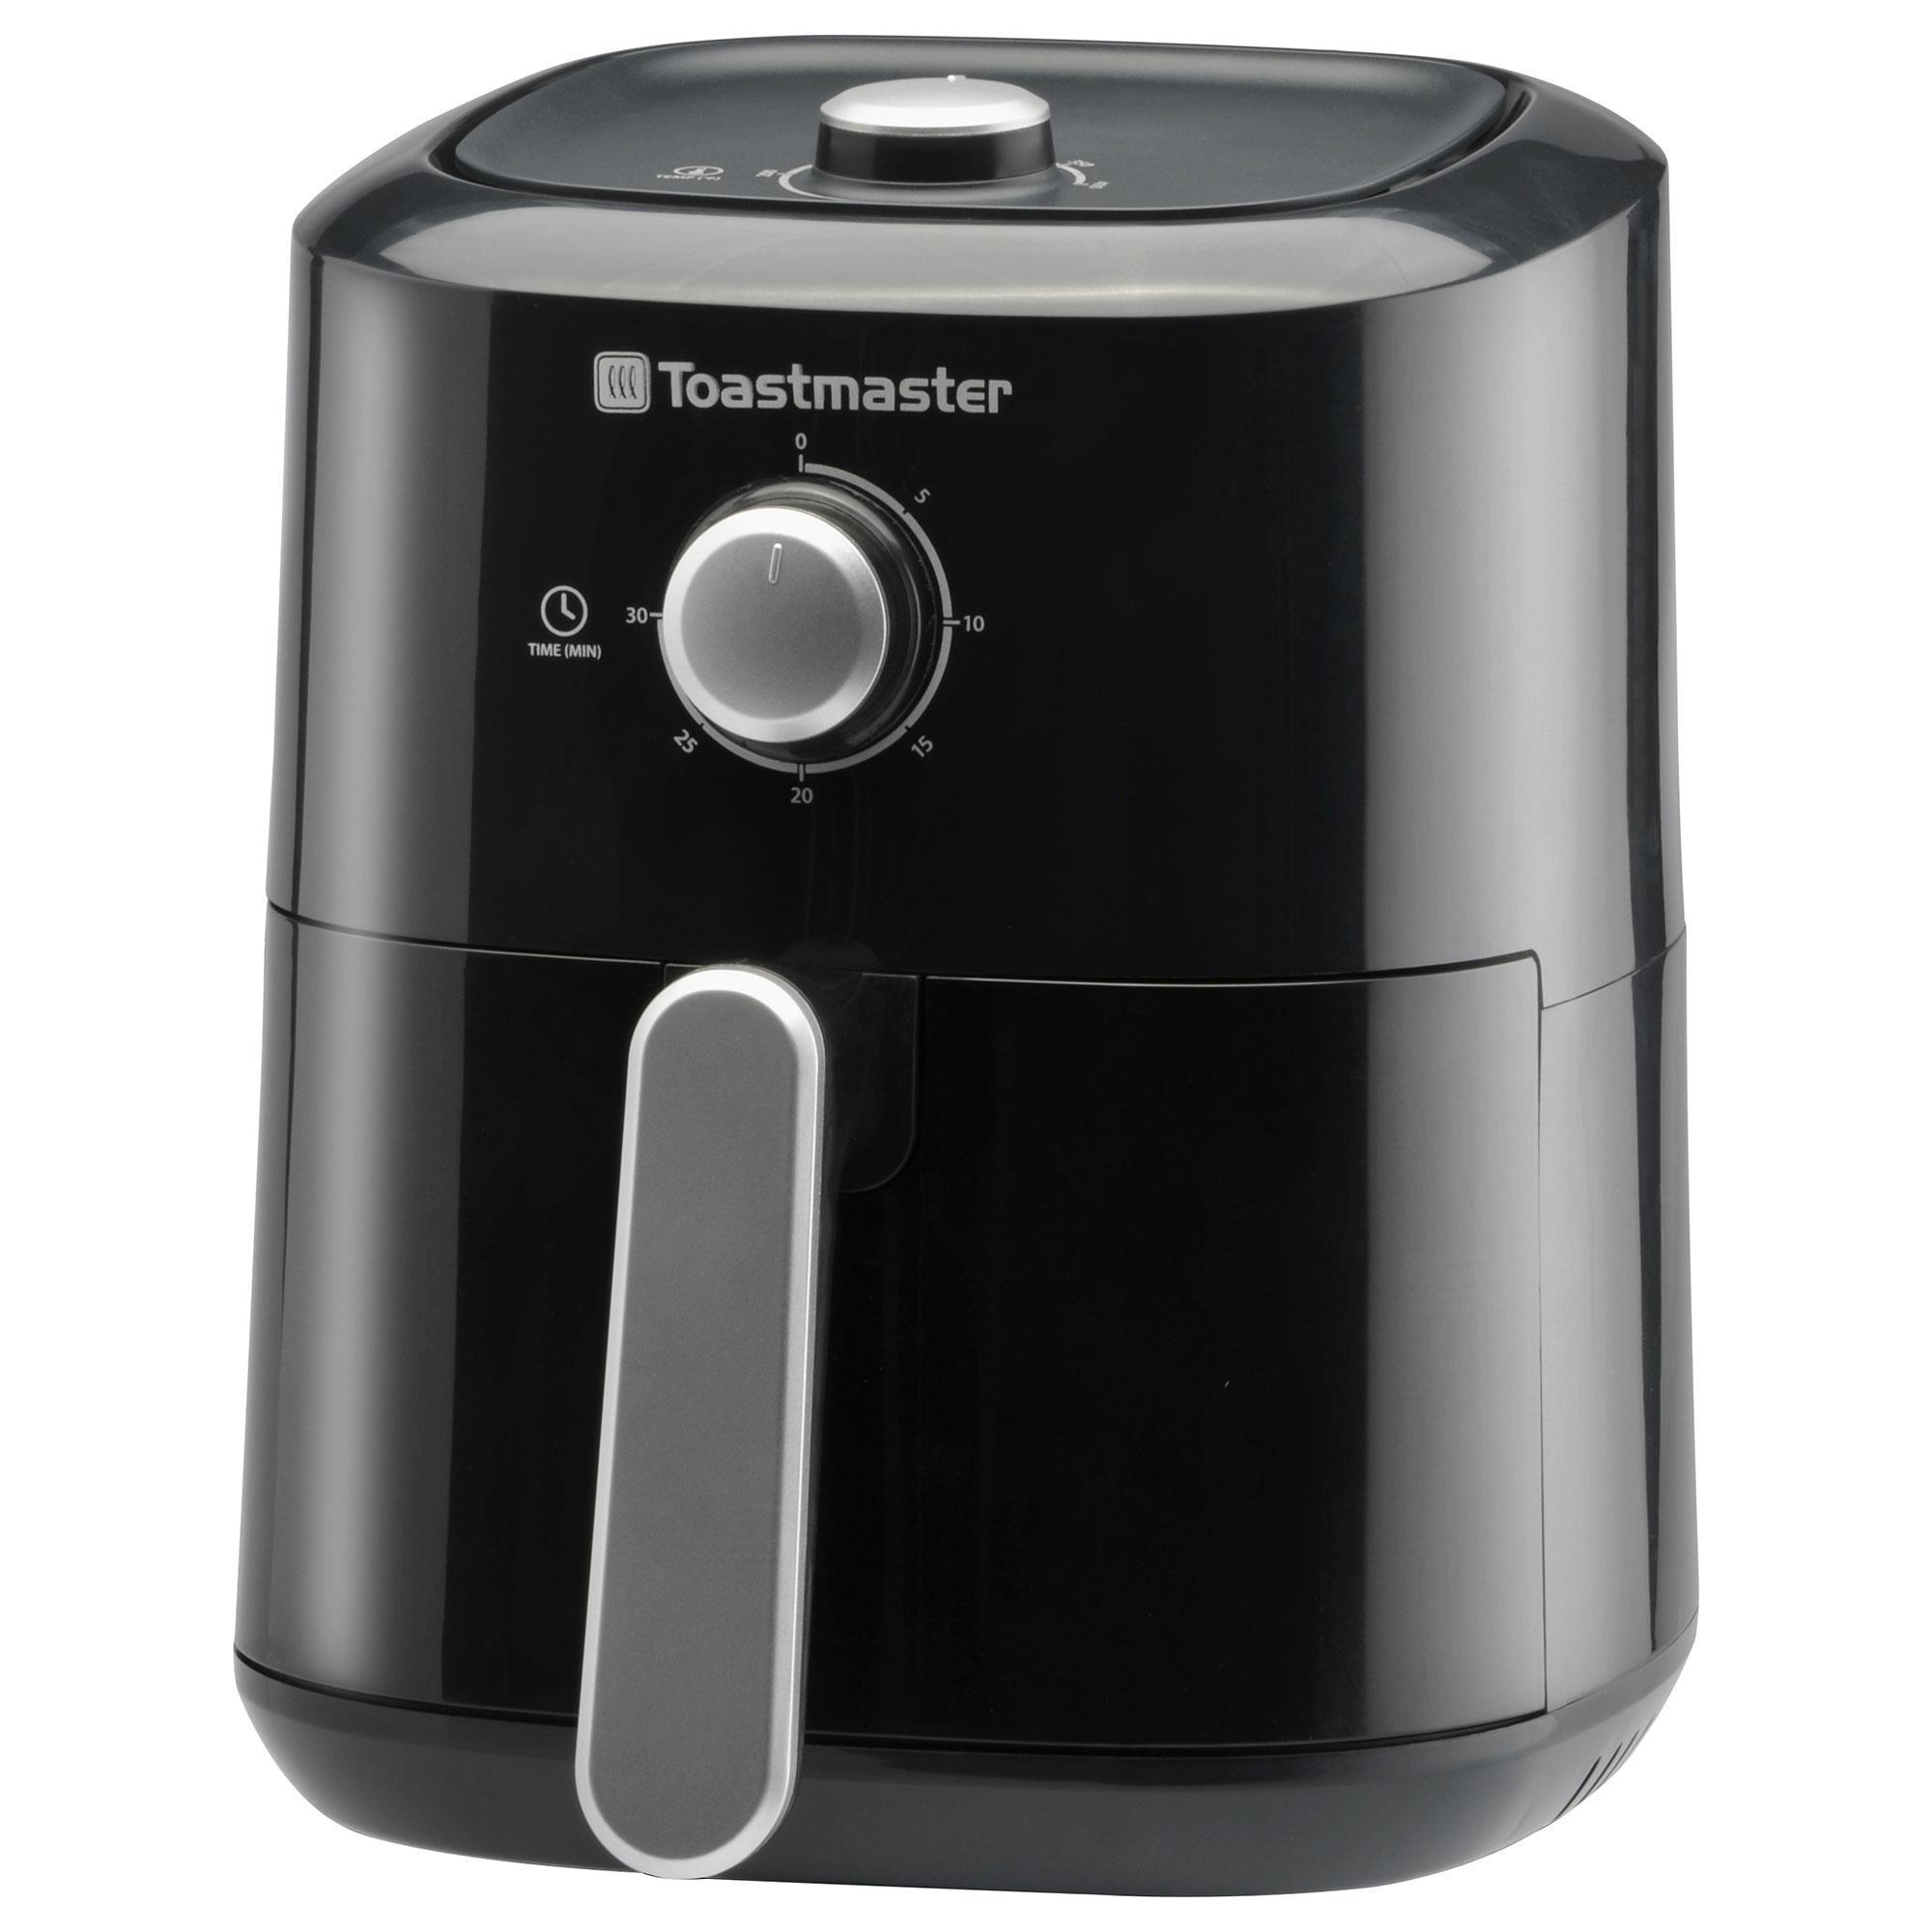 Toastmaster Air Fryer